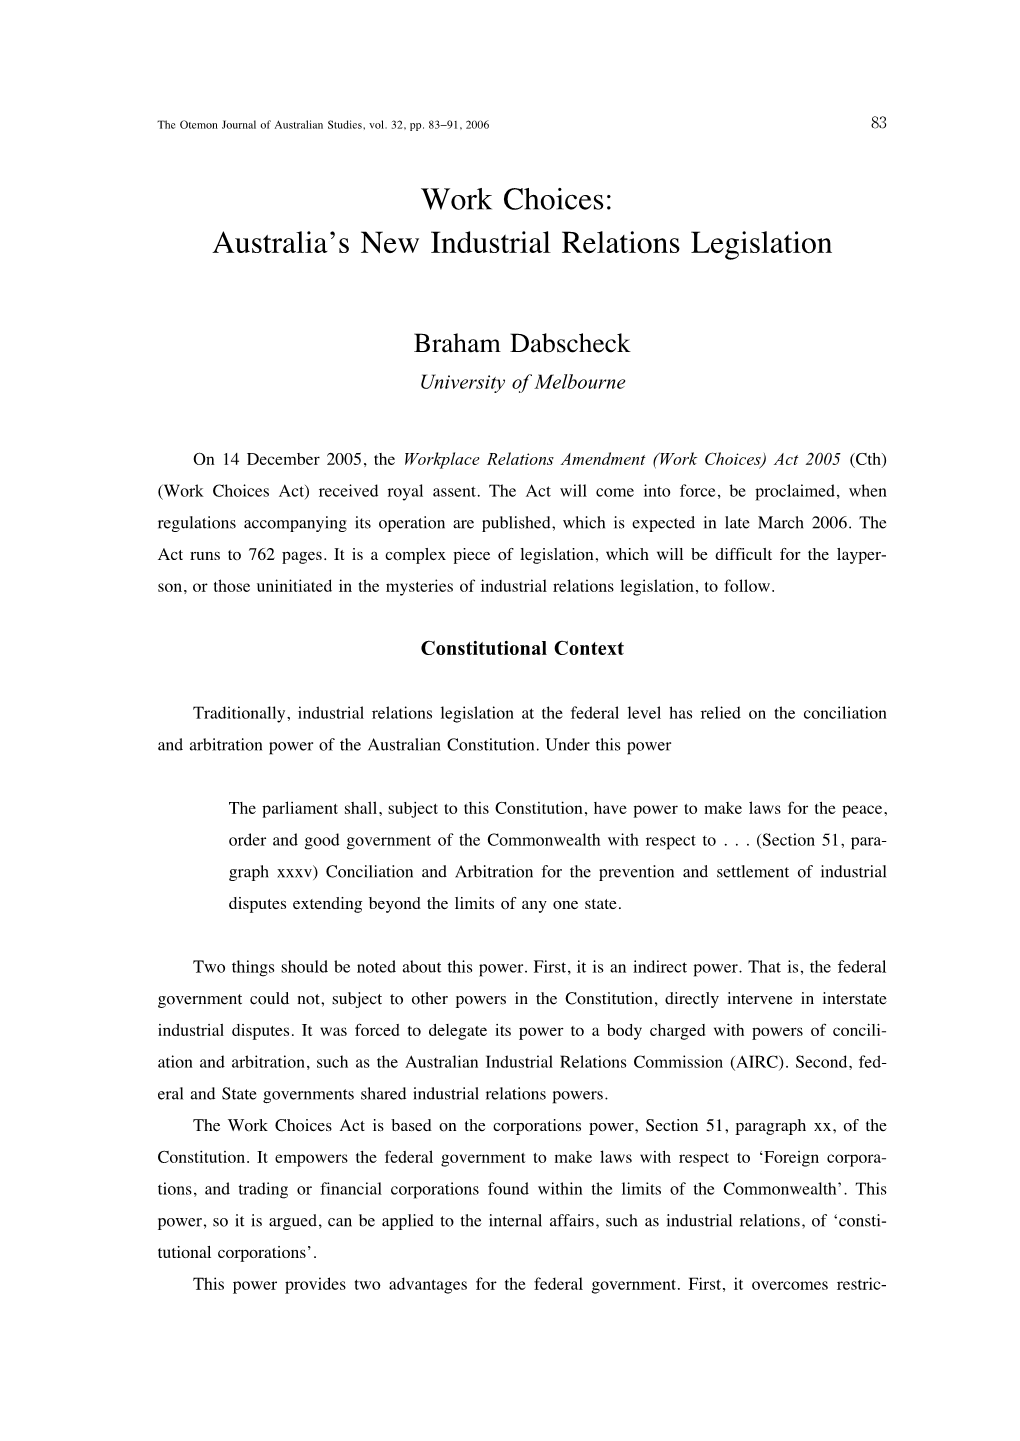 Work Choices: Australia's New Industrial Relations Legislation